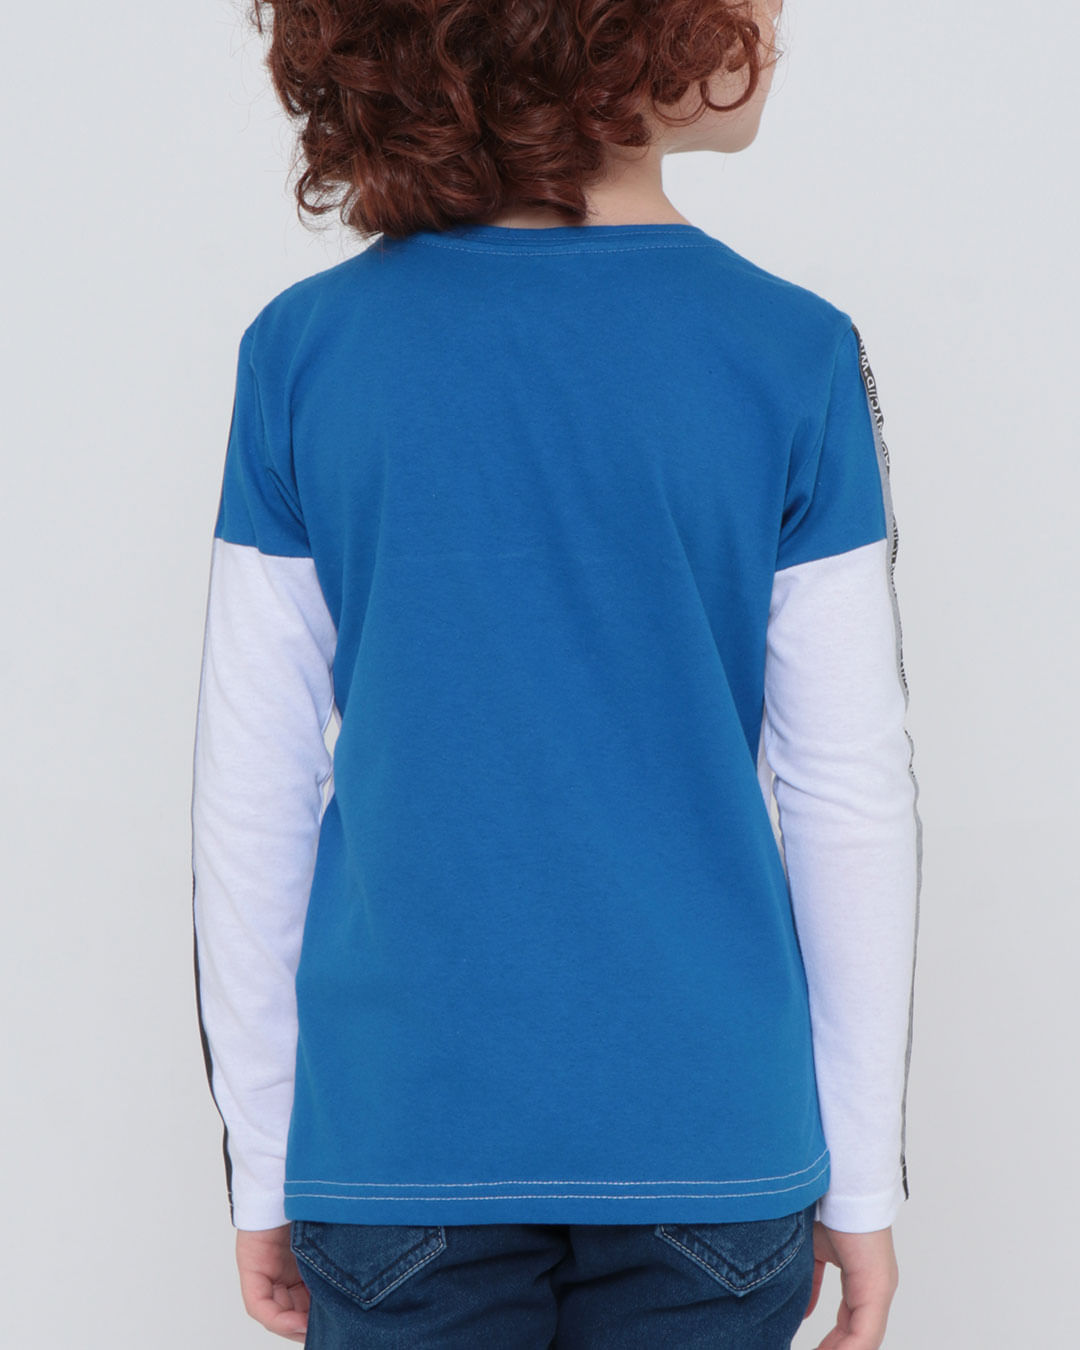 Camiseta-02-Ml-Cp-M410-Street---Azul-Medio